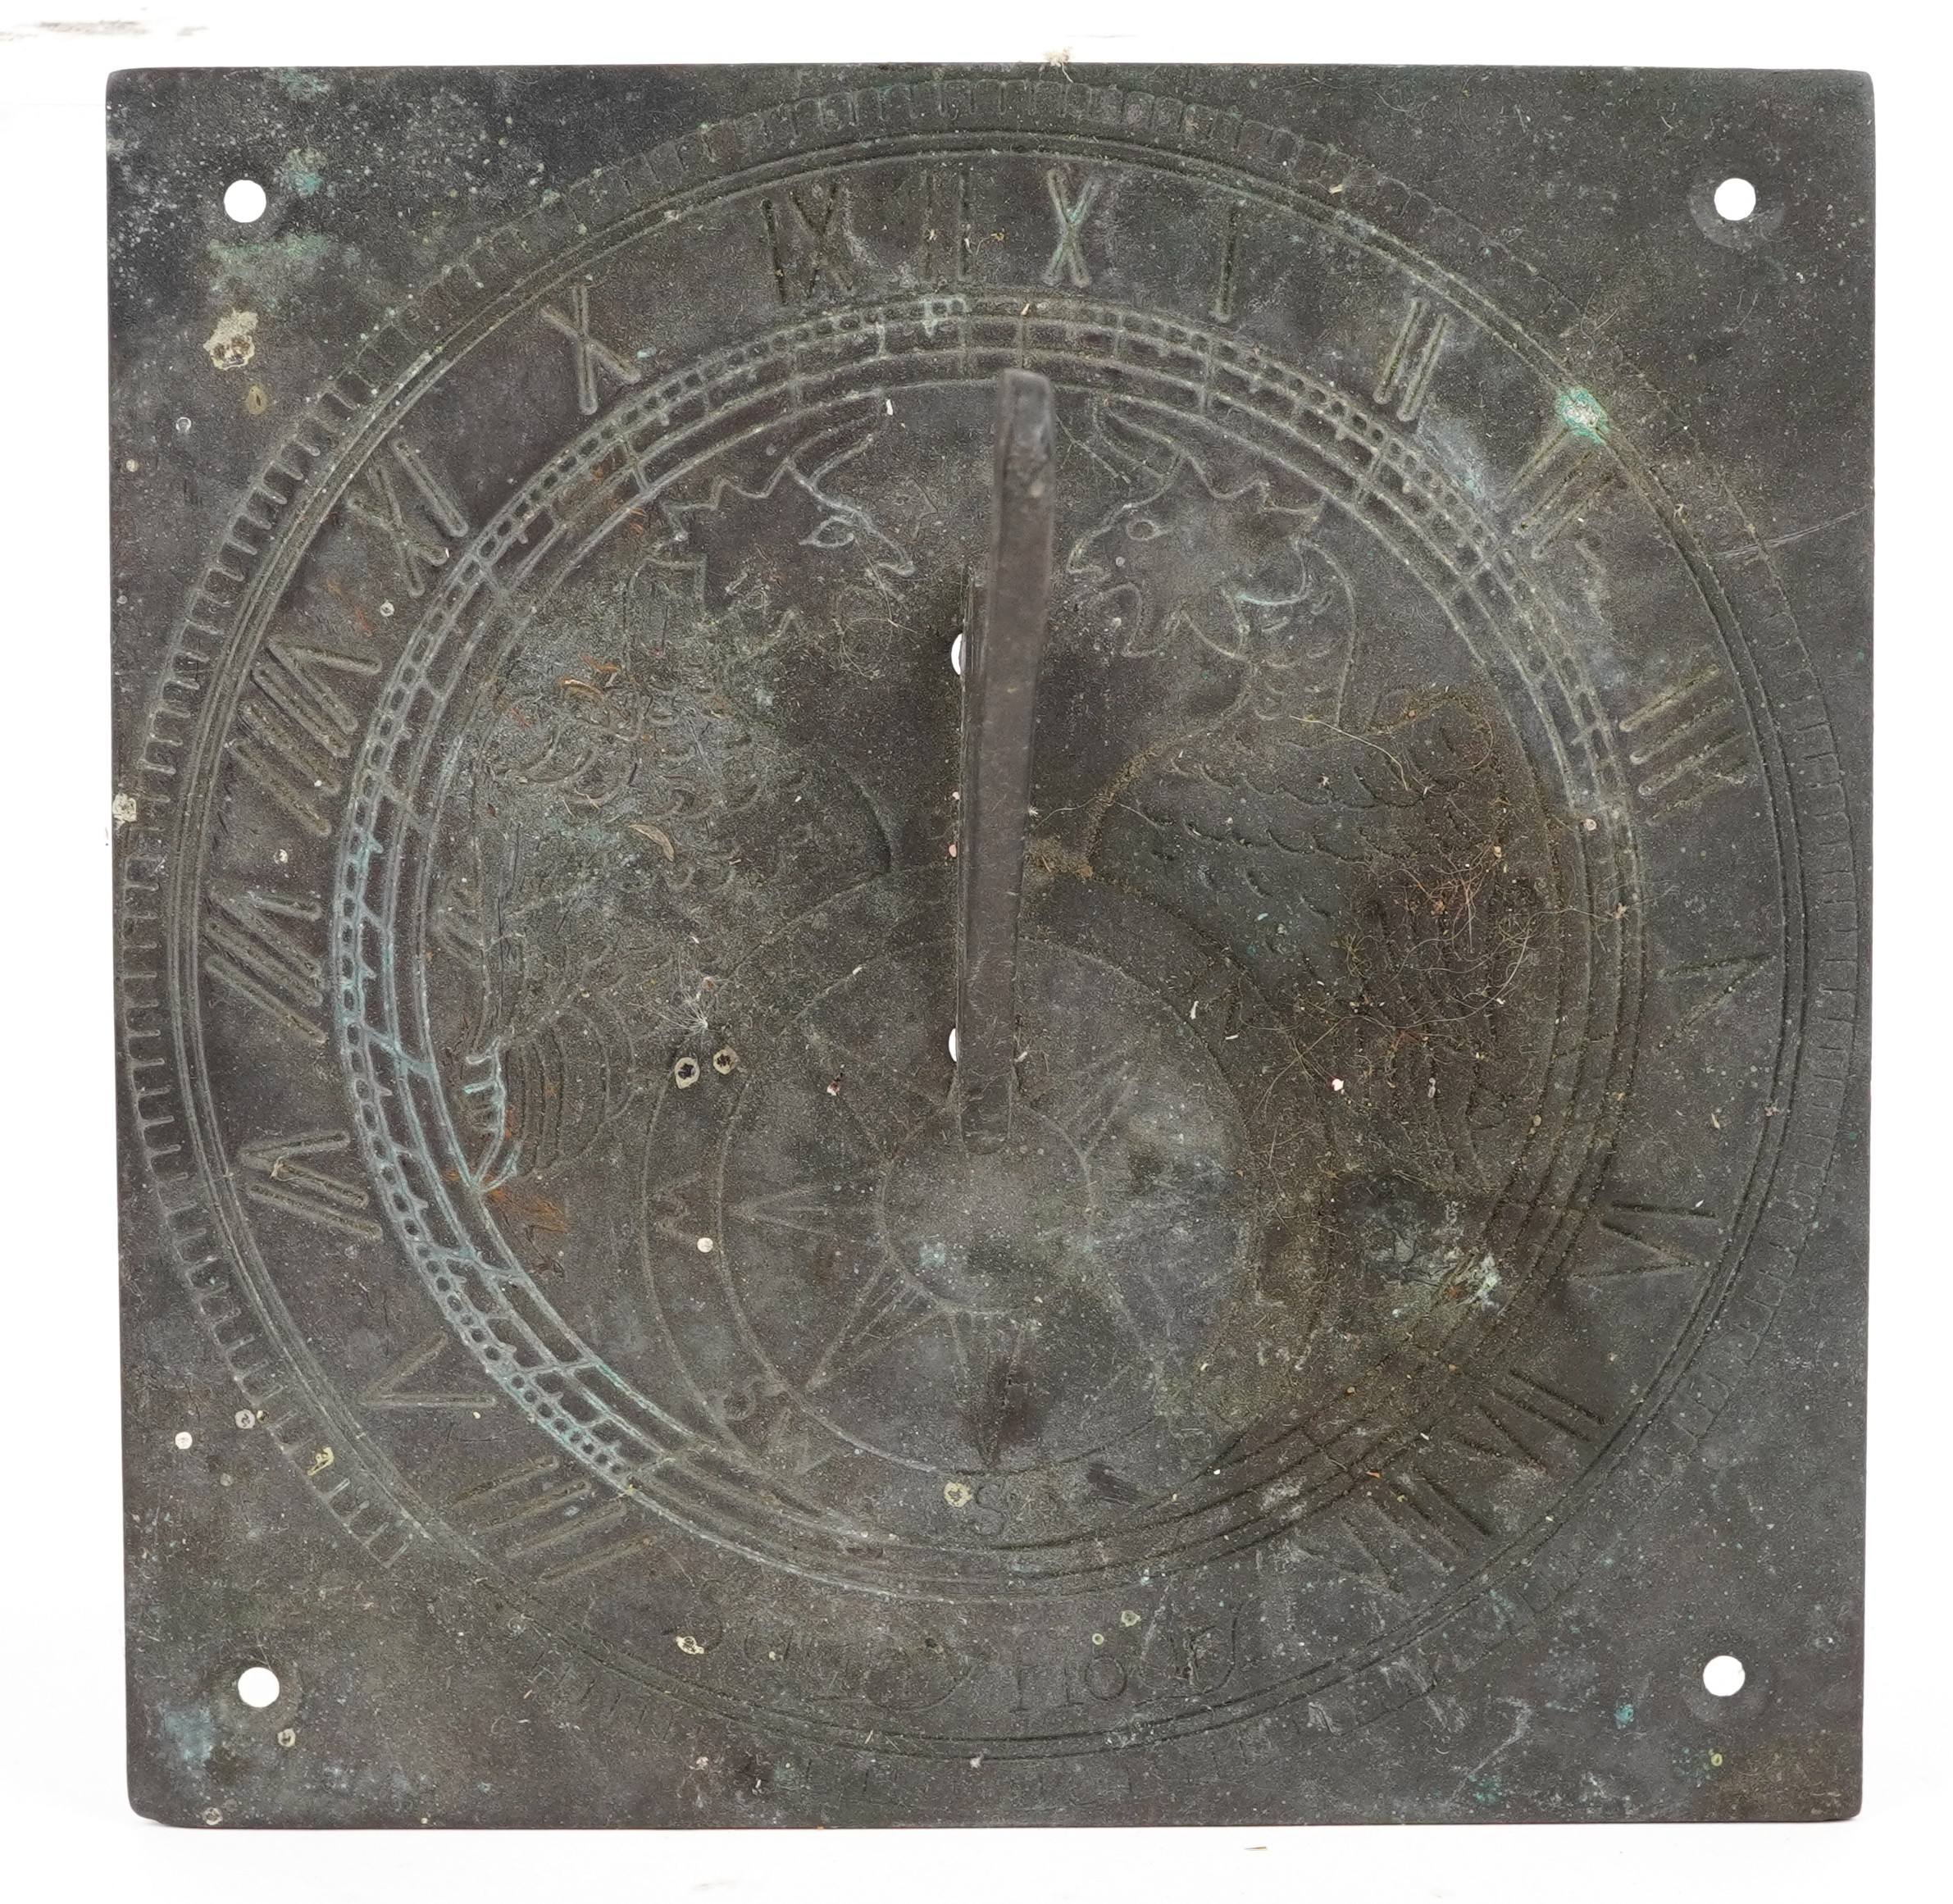 Antique verdigris patinated bronze sundial engraved with griffins, 16cm x 16cm - Image 3 of 4